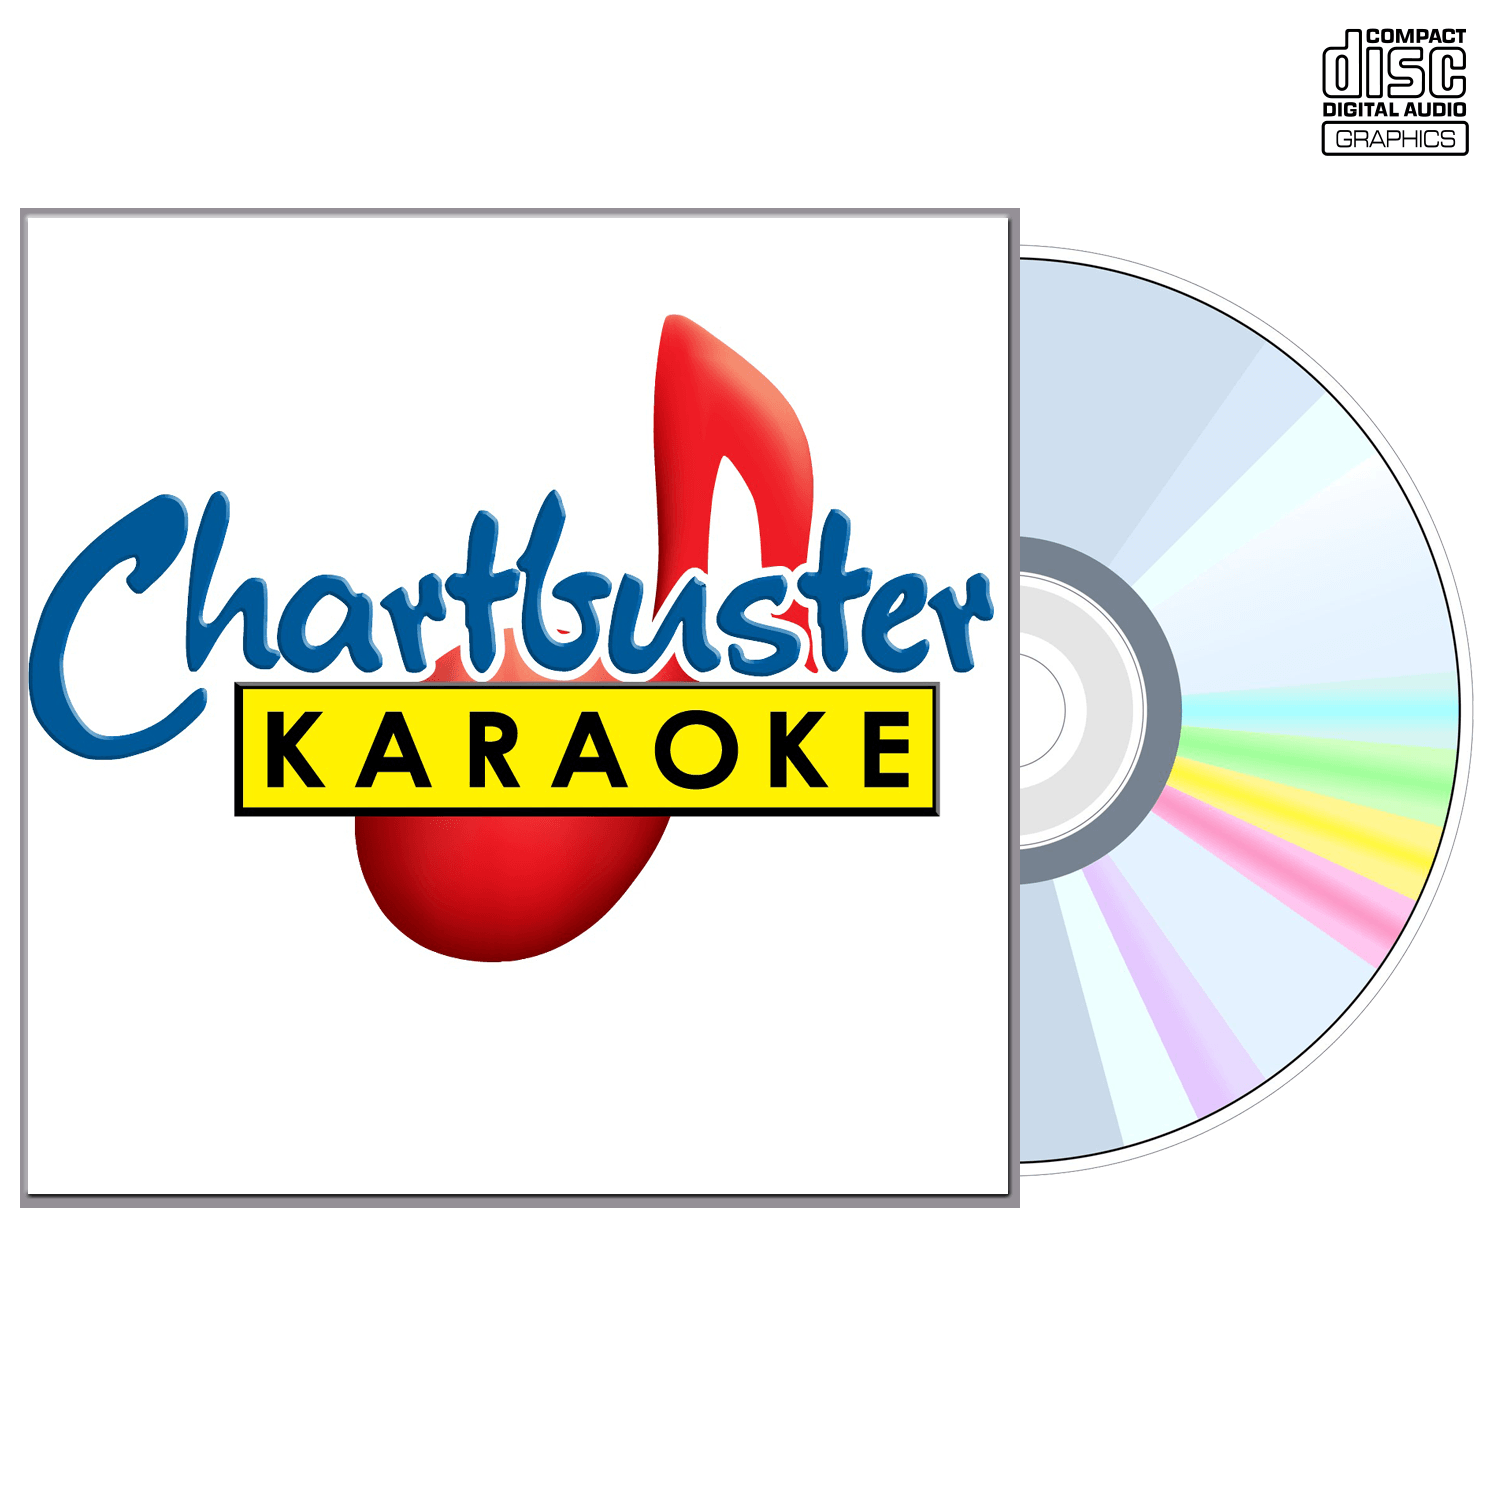 Ultimate 90's Collection 2 - CD+G - Chartbuster Karaoke - Karaoke Home Entertainment